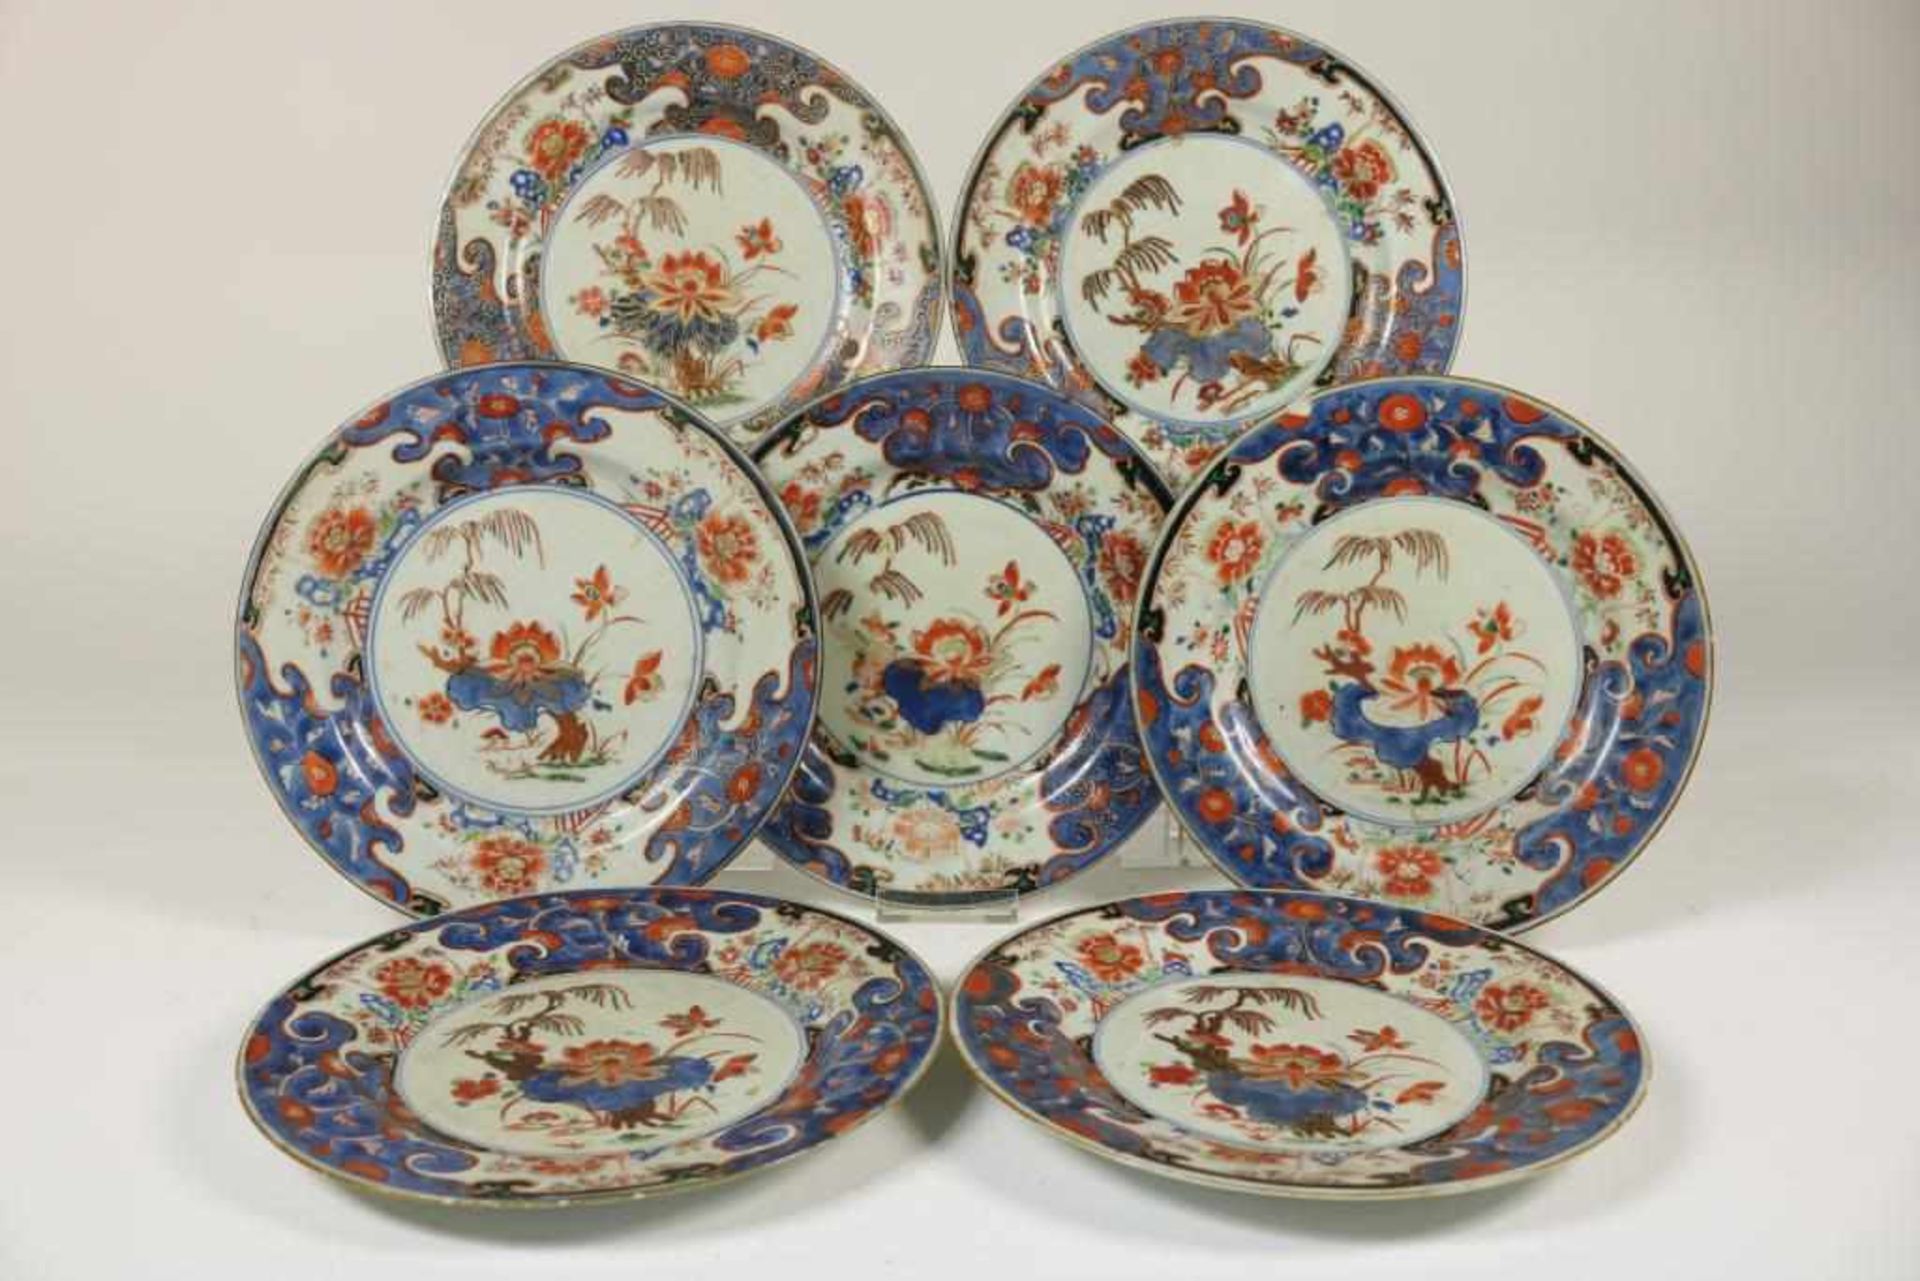 a set of 6 porcelain Imari dishes, China 18th century.